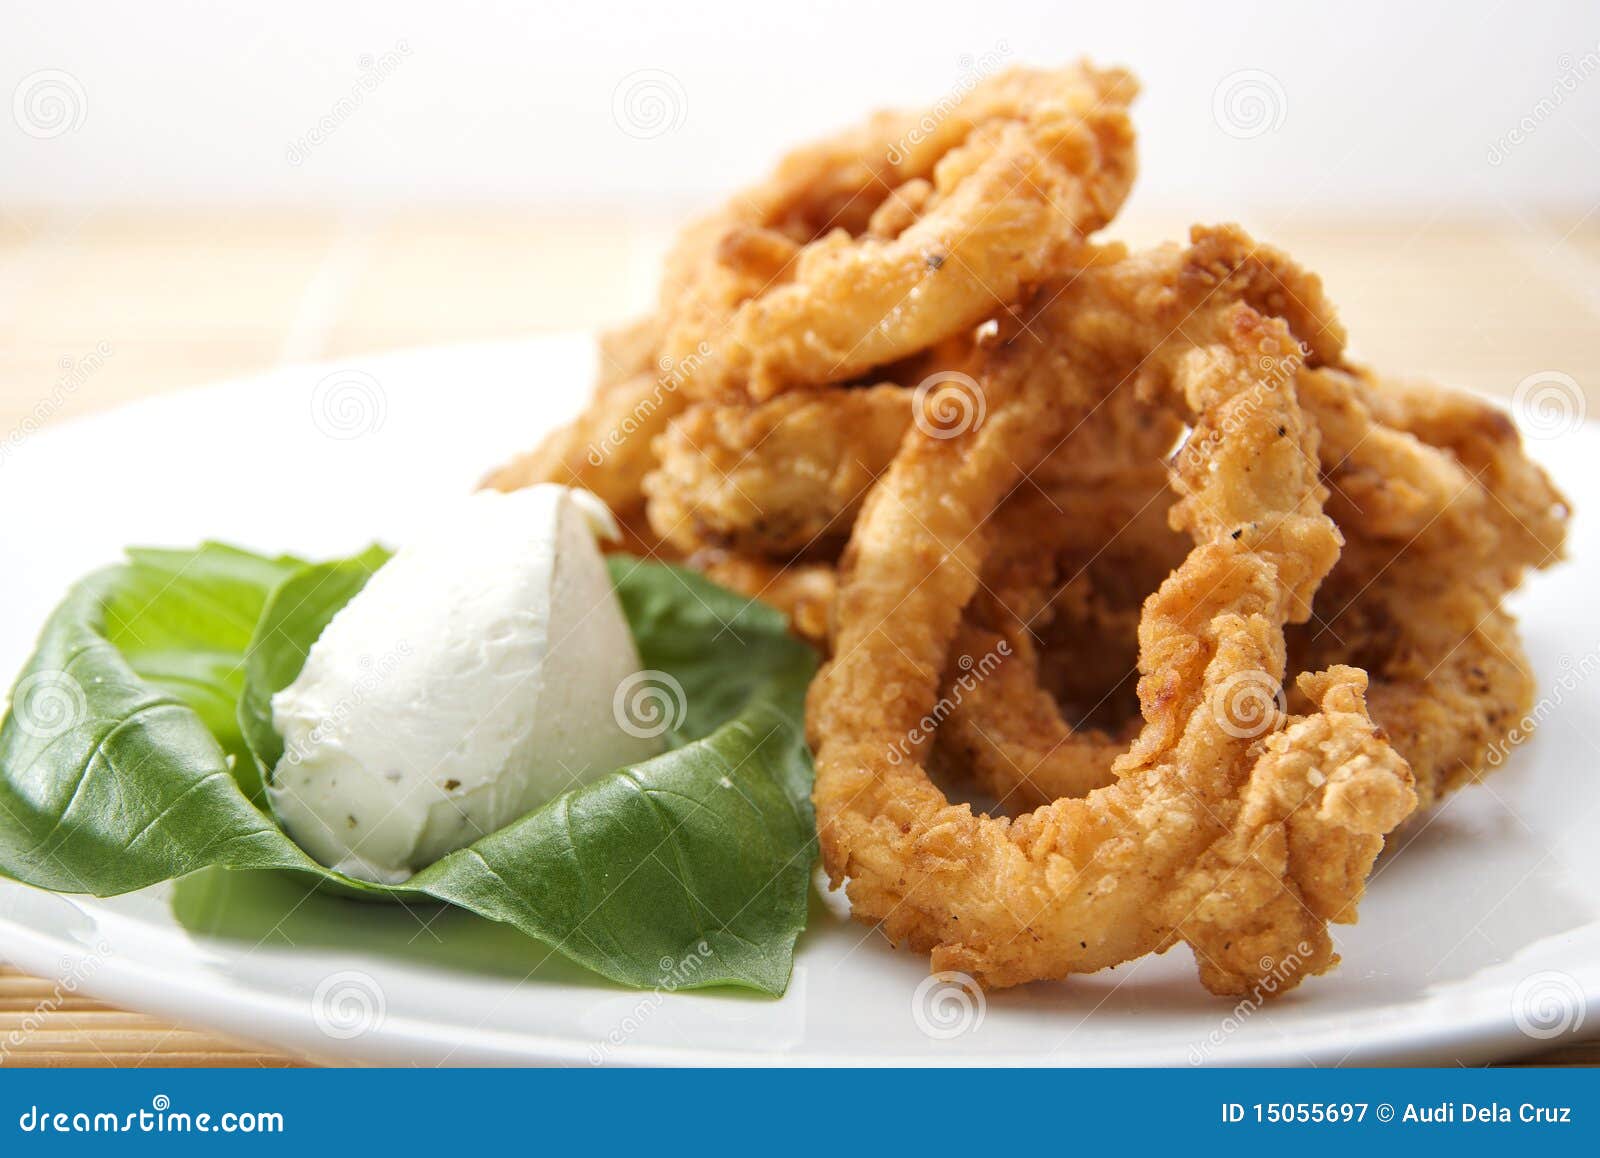 breaded calamari rings